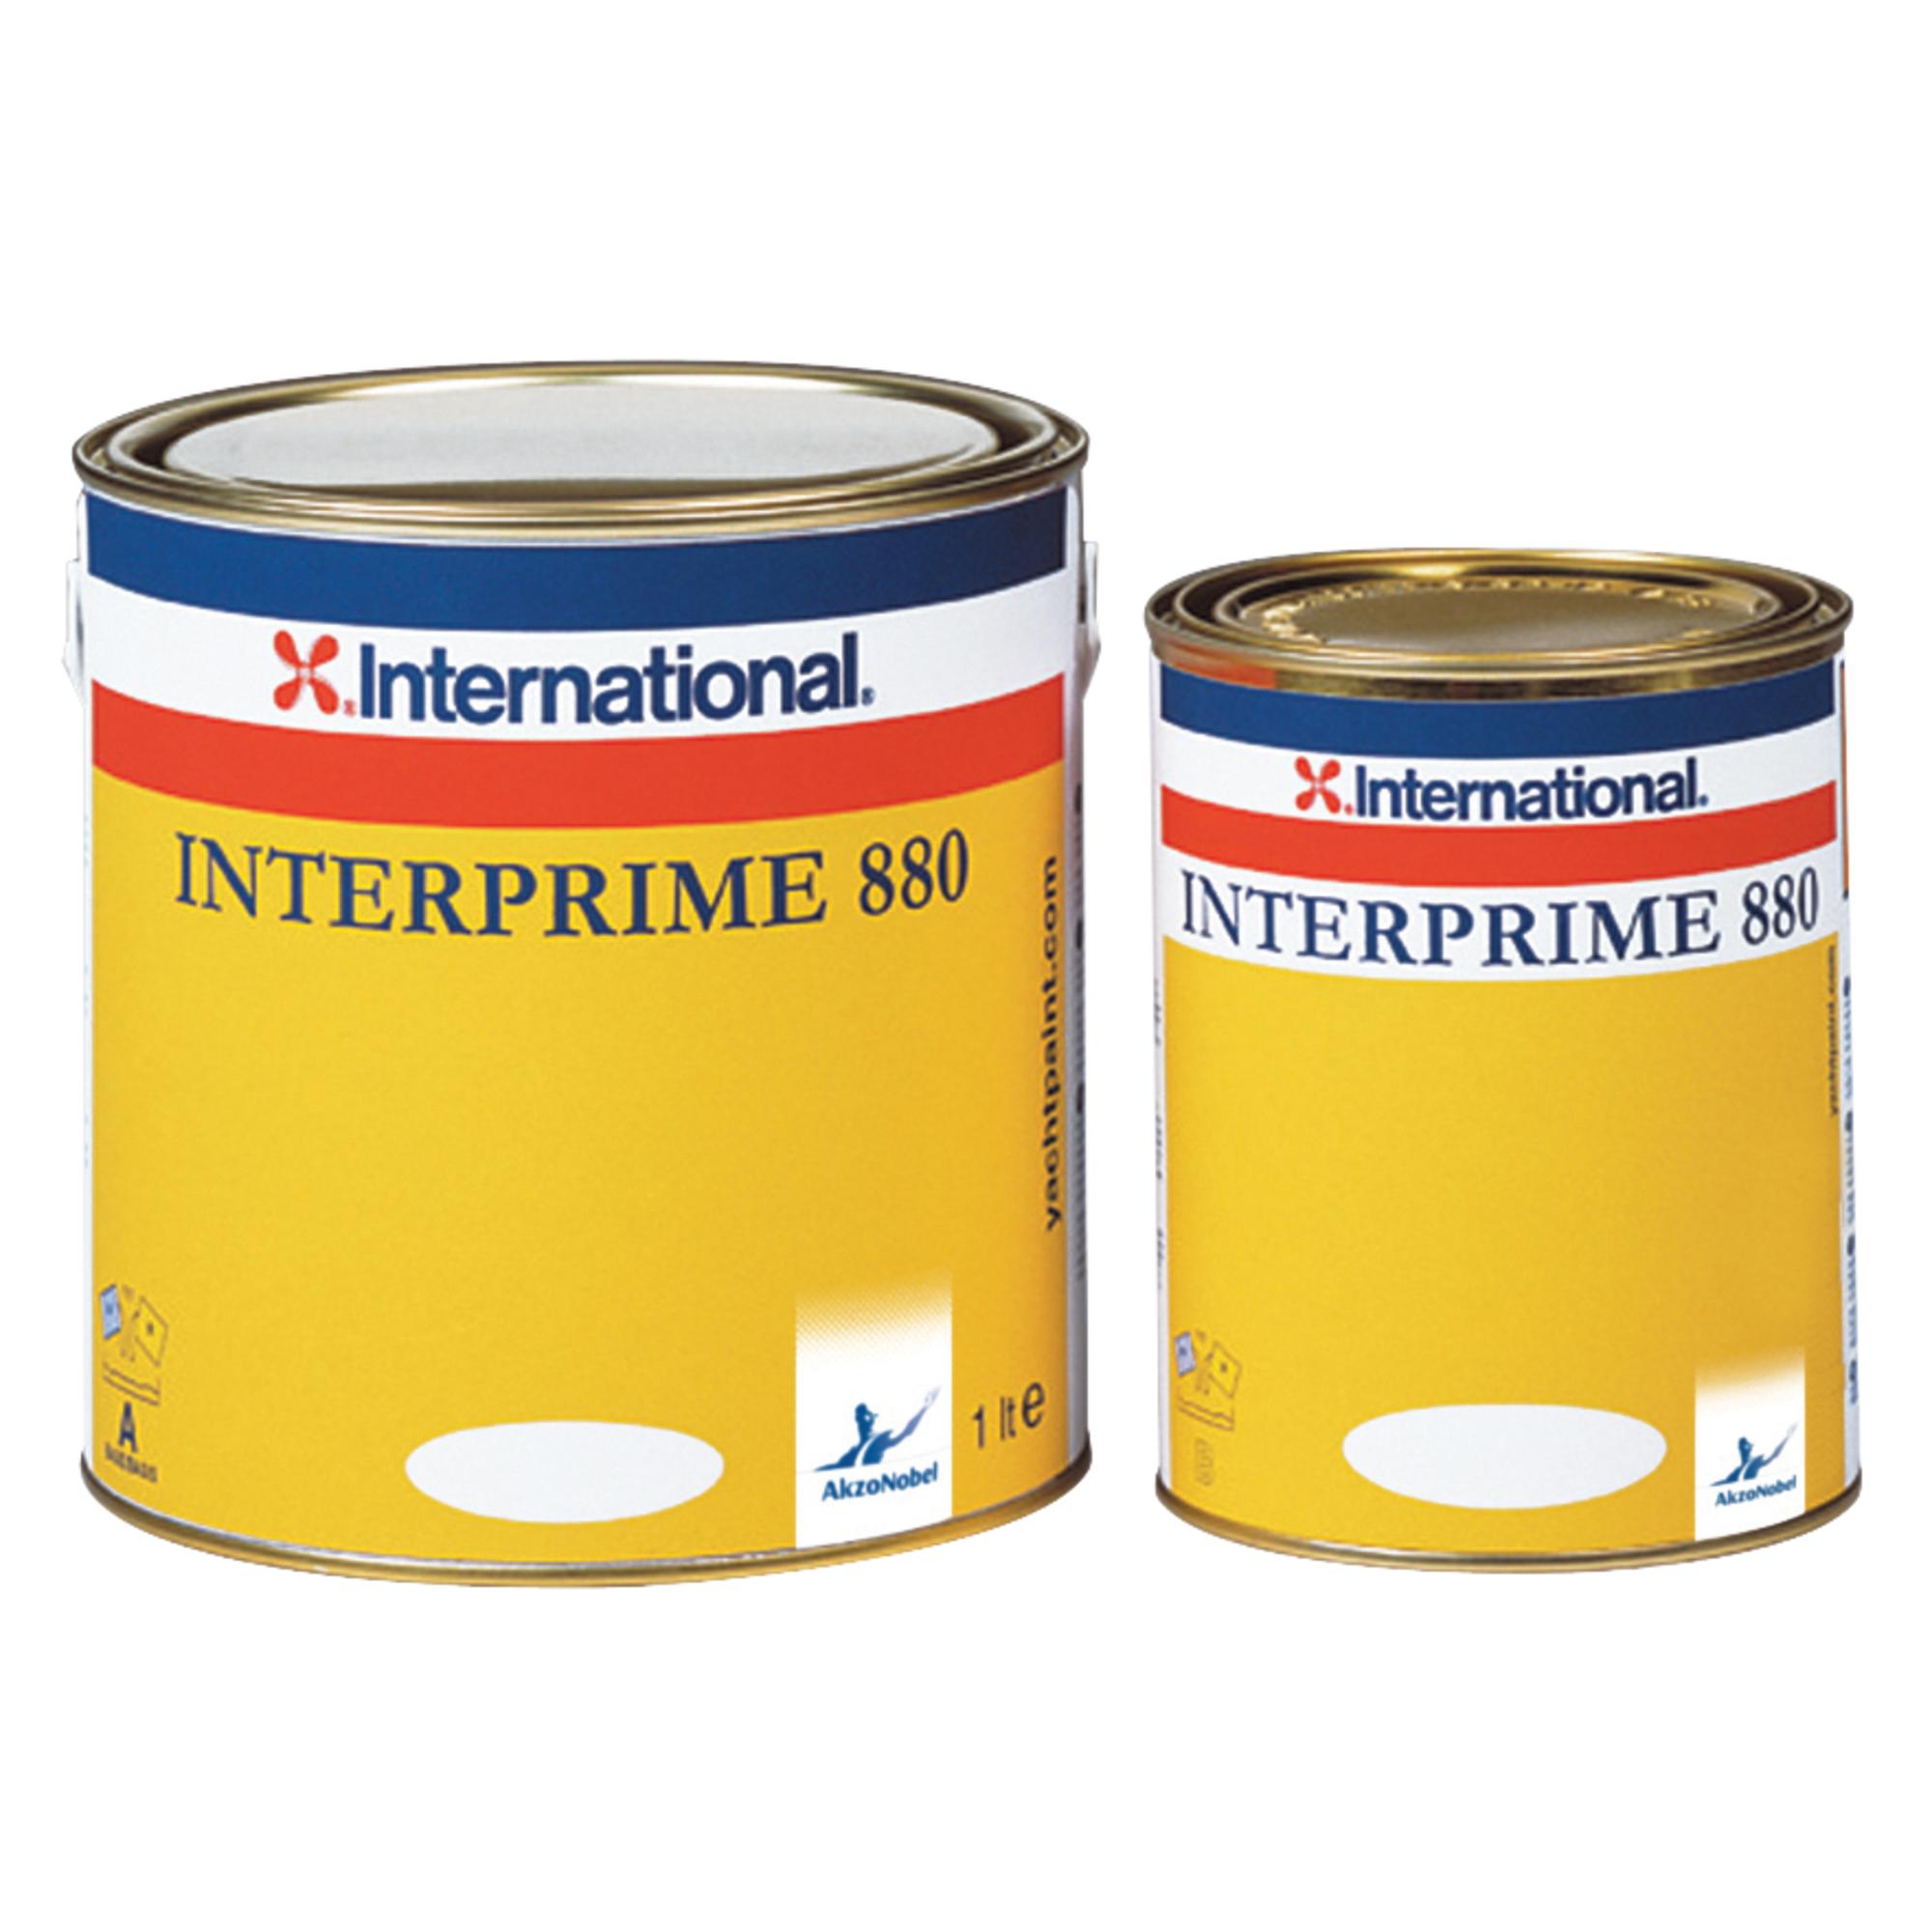 Interprime 880 (Profi) | Interprime880_2ltkit_EU_2.jpg | 1700897685